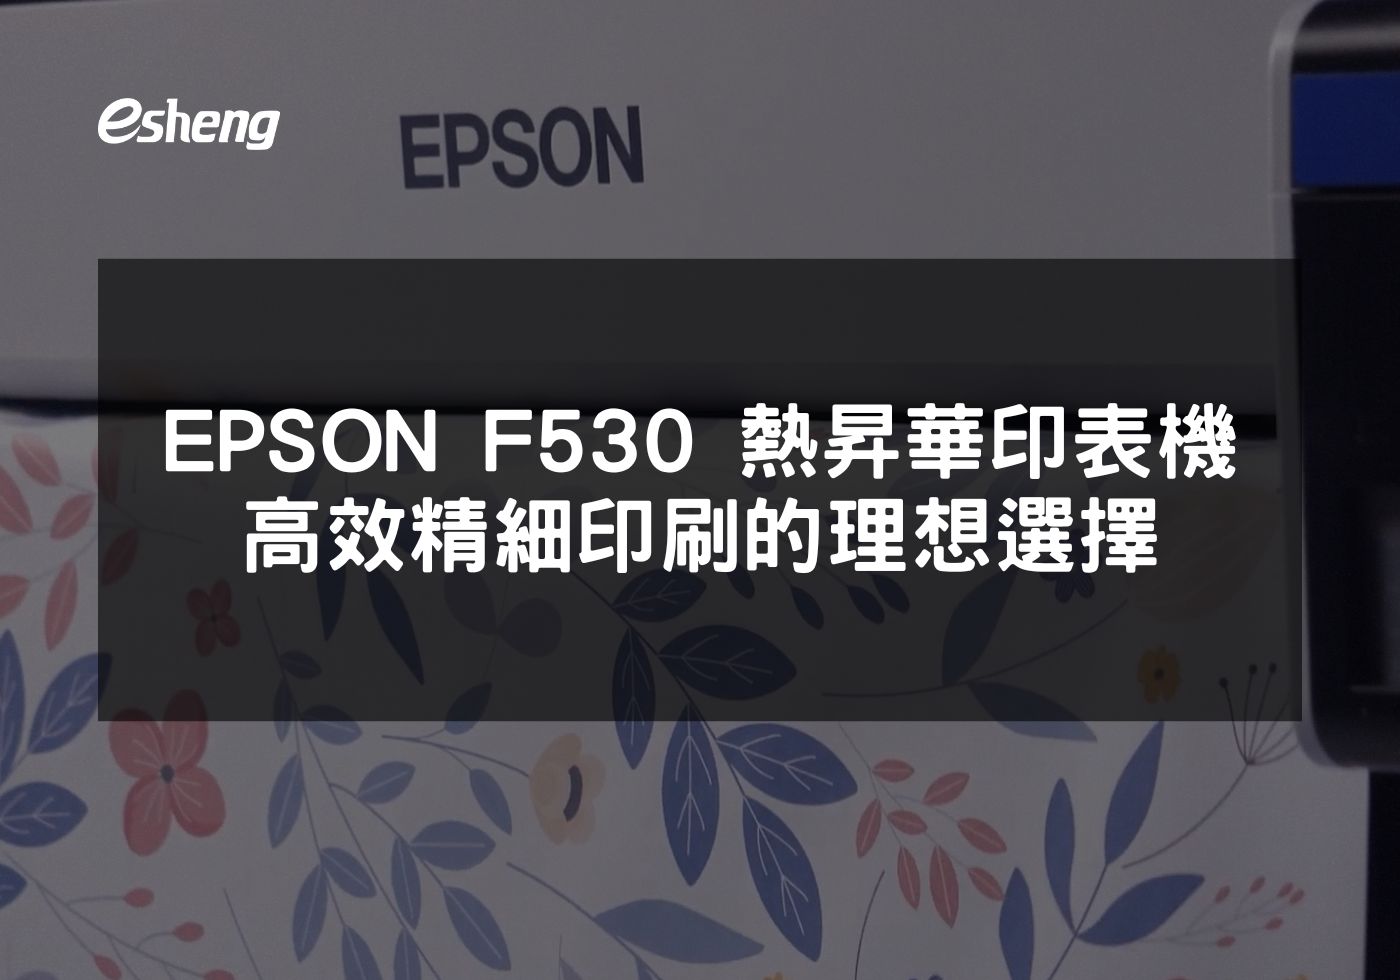 EPSON F530 熱昇華印表機 高效精細印刷的理想選擇